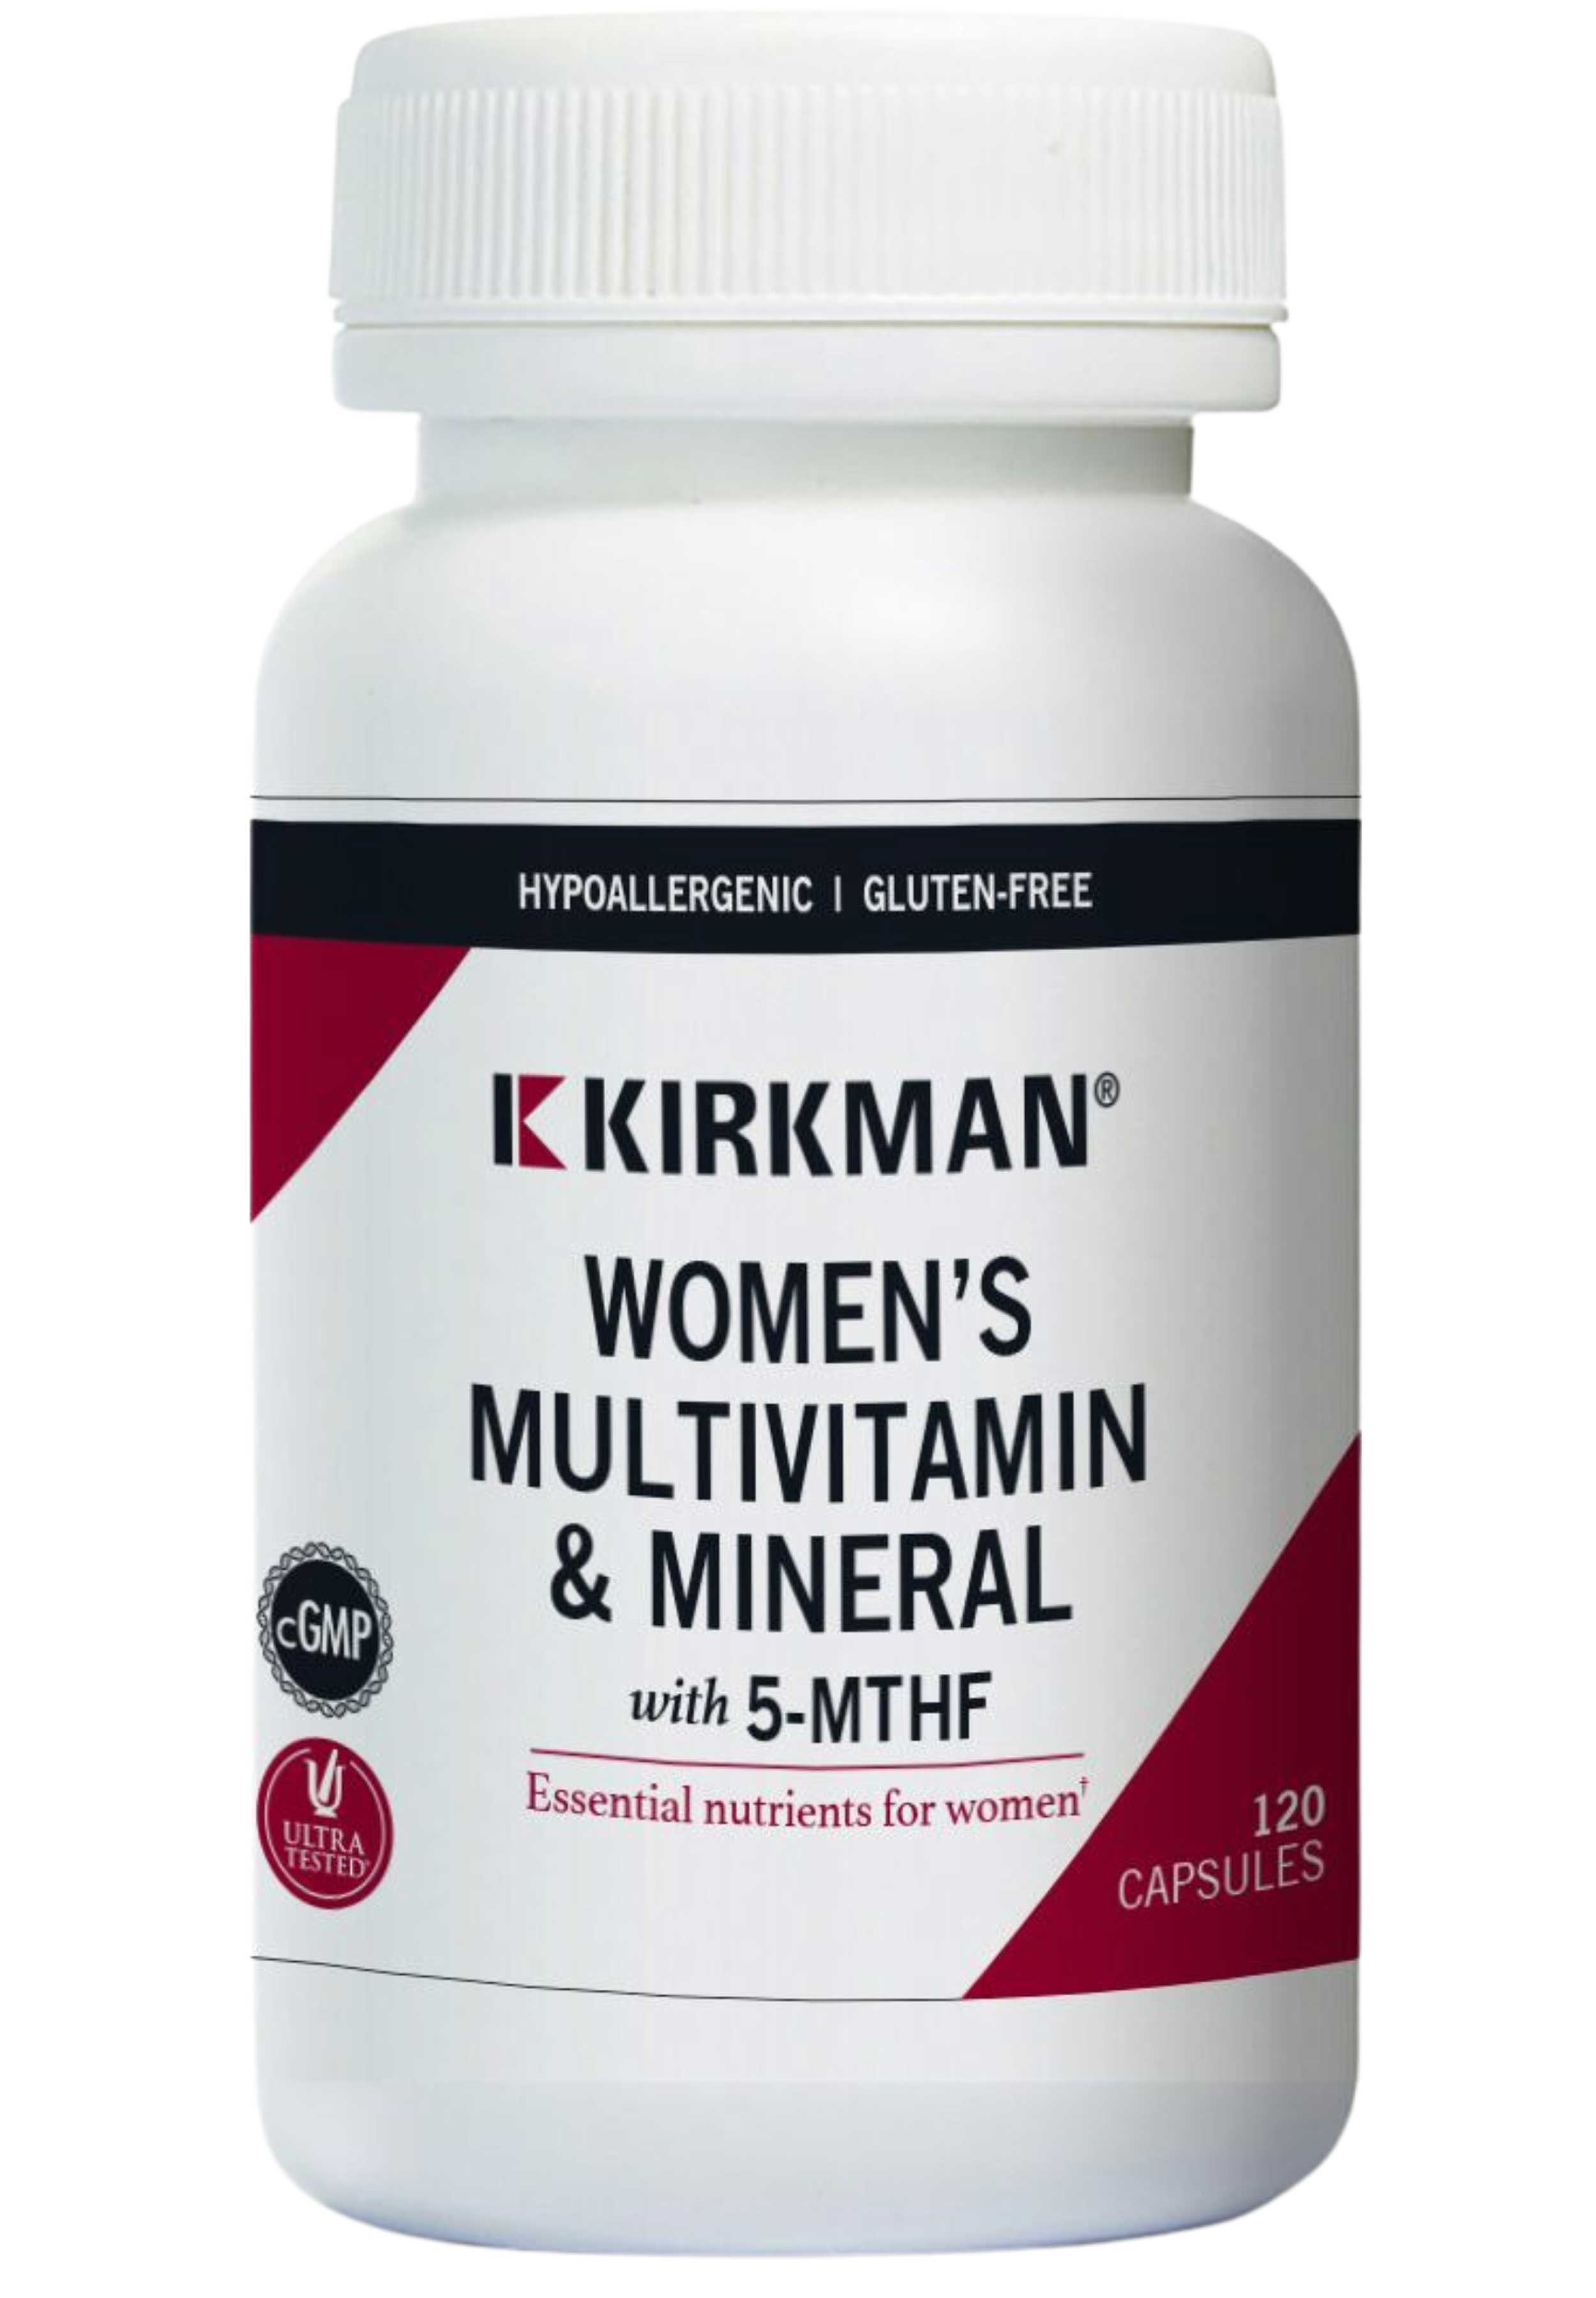 Kirkman Women's Multivitamin and Mineral